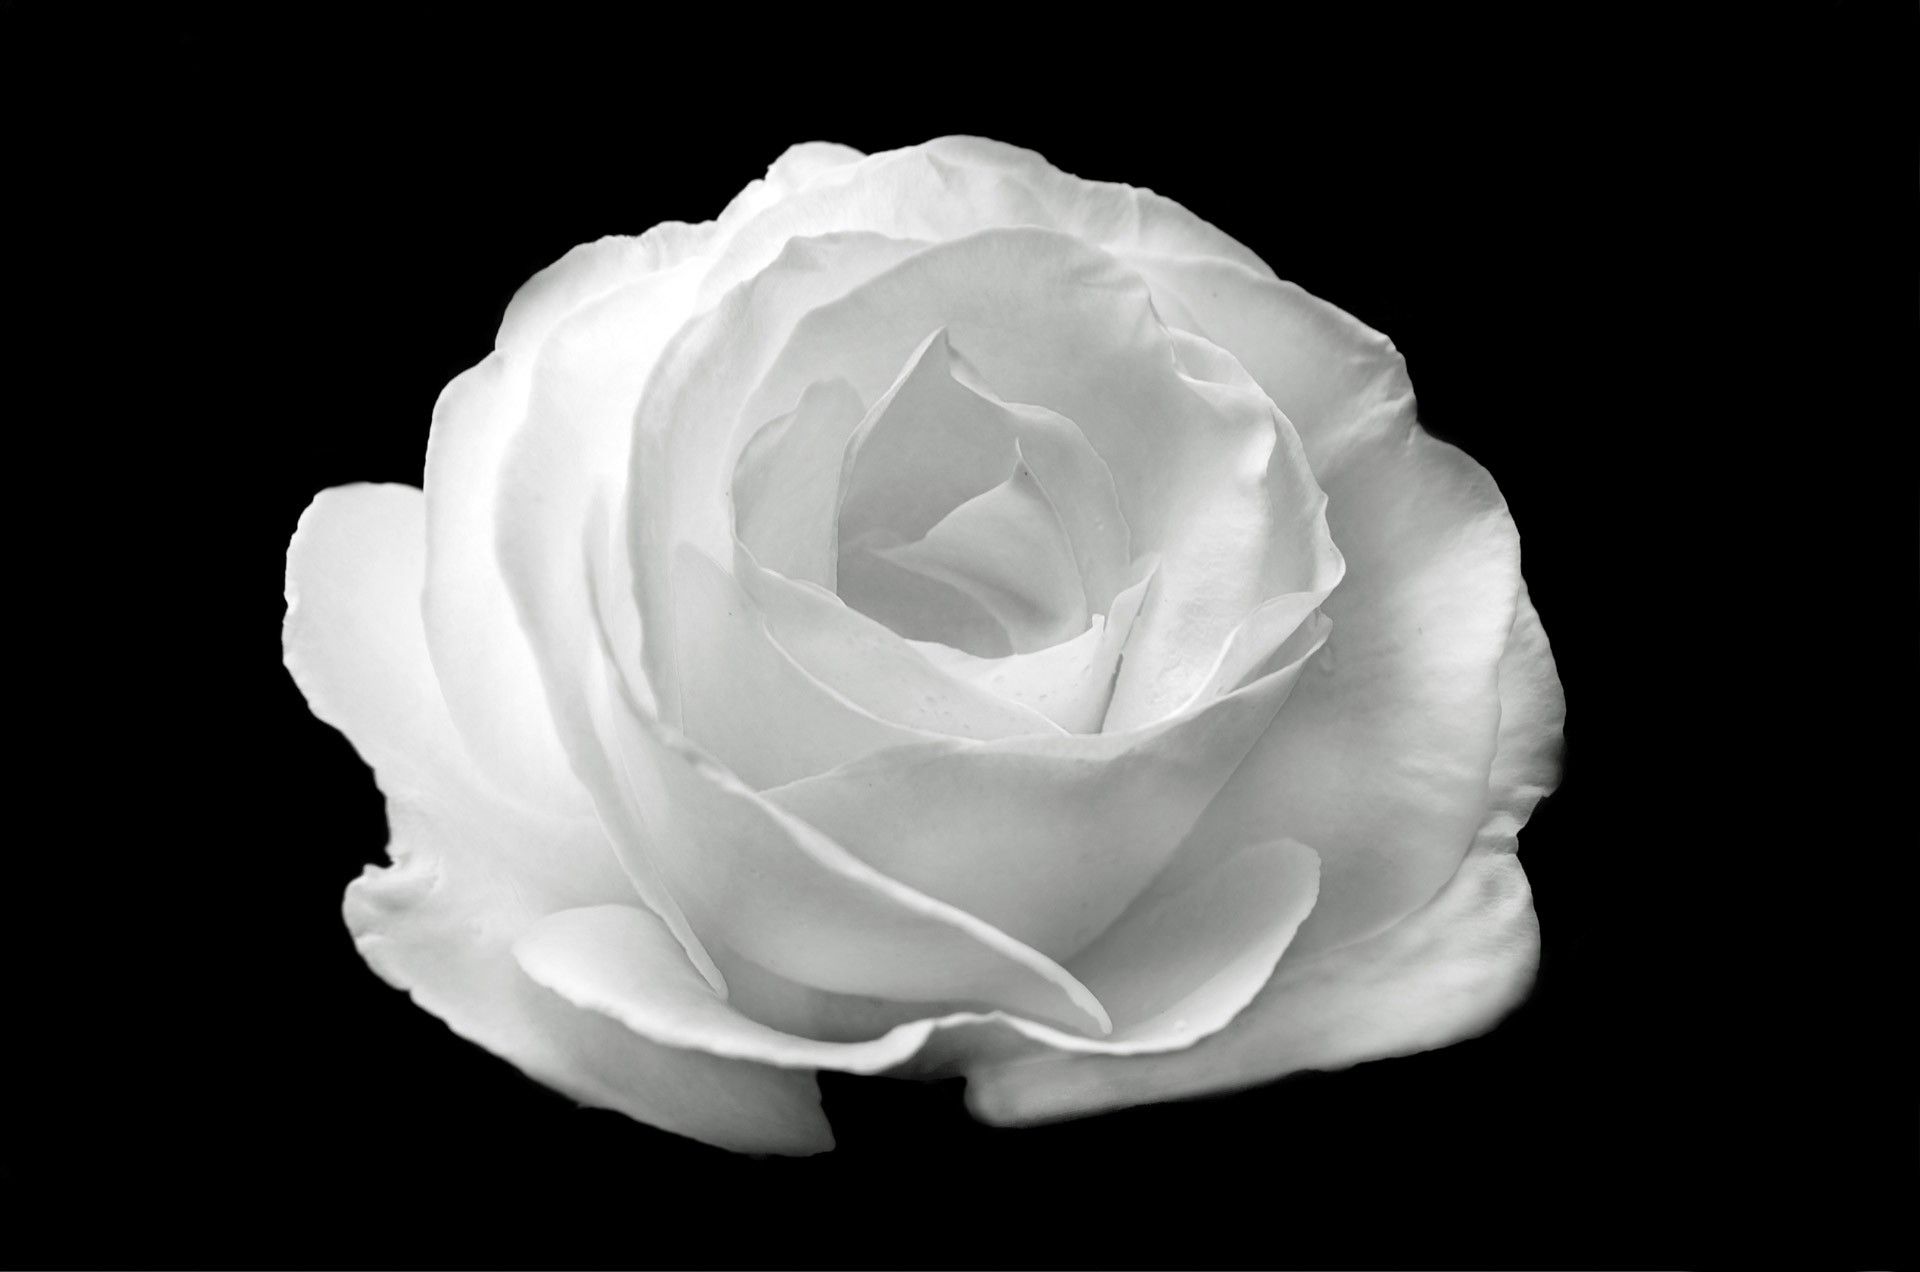 black and white rose wallpaper لم يسبق له مثيل الصور + tier3.xyz